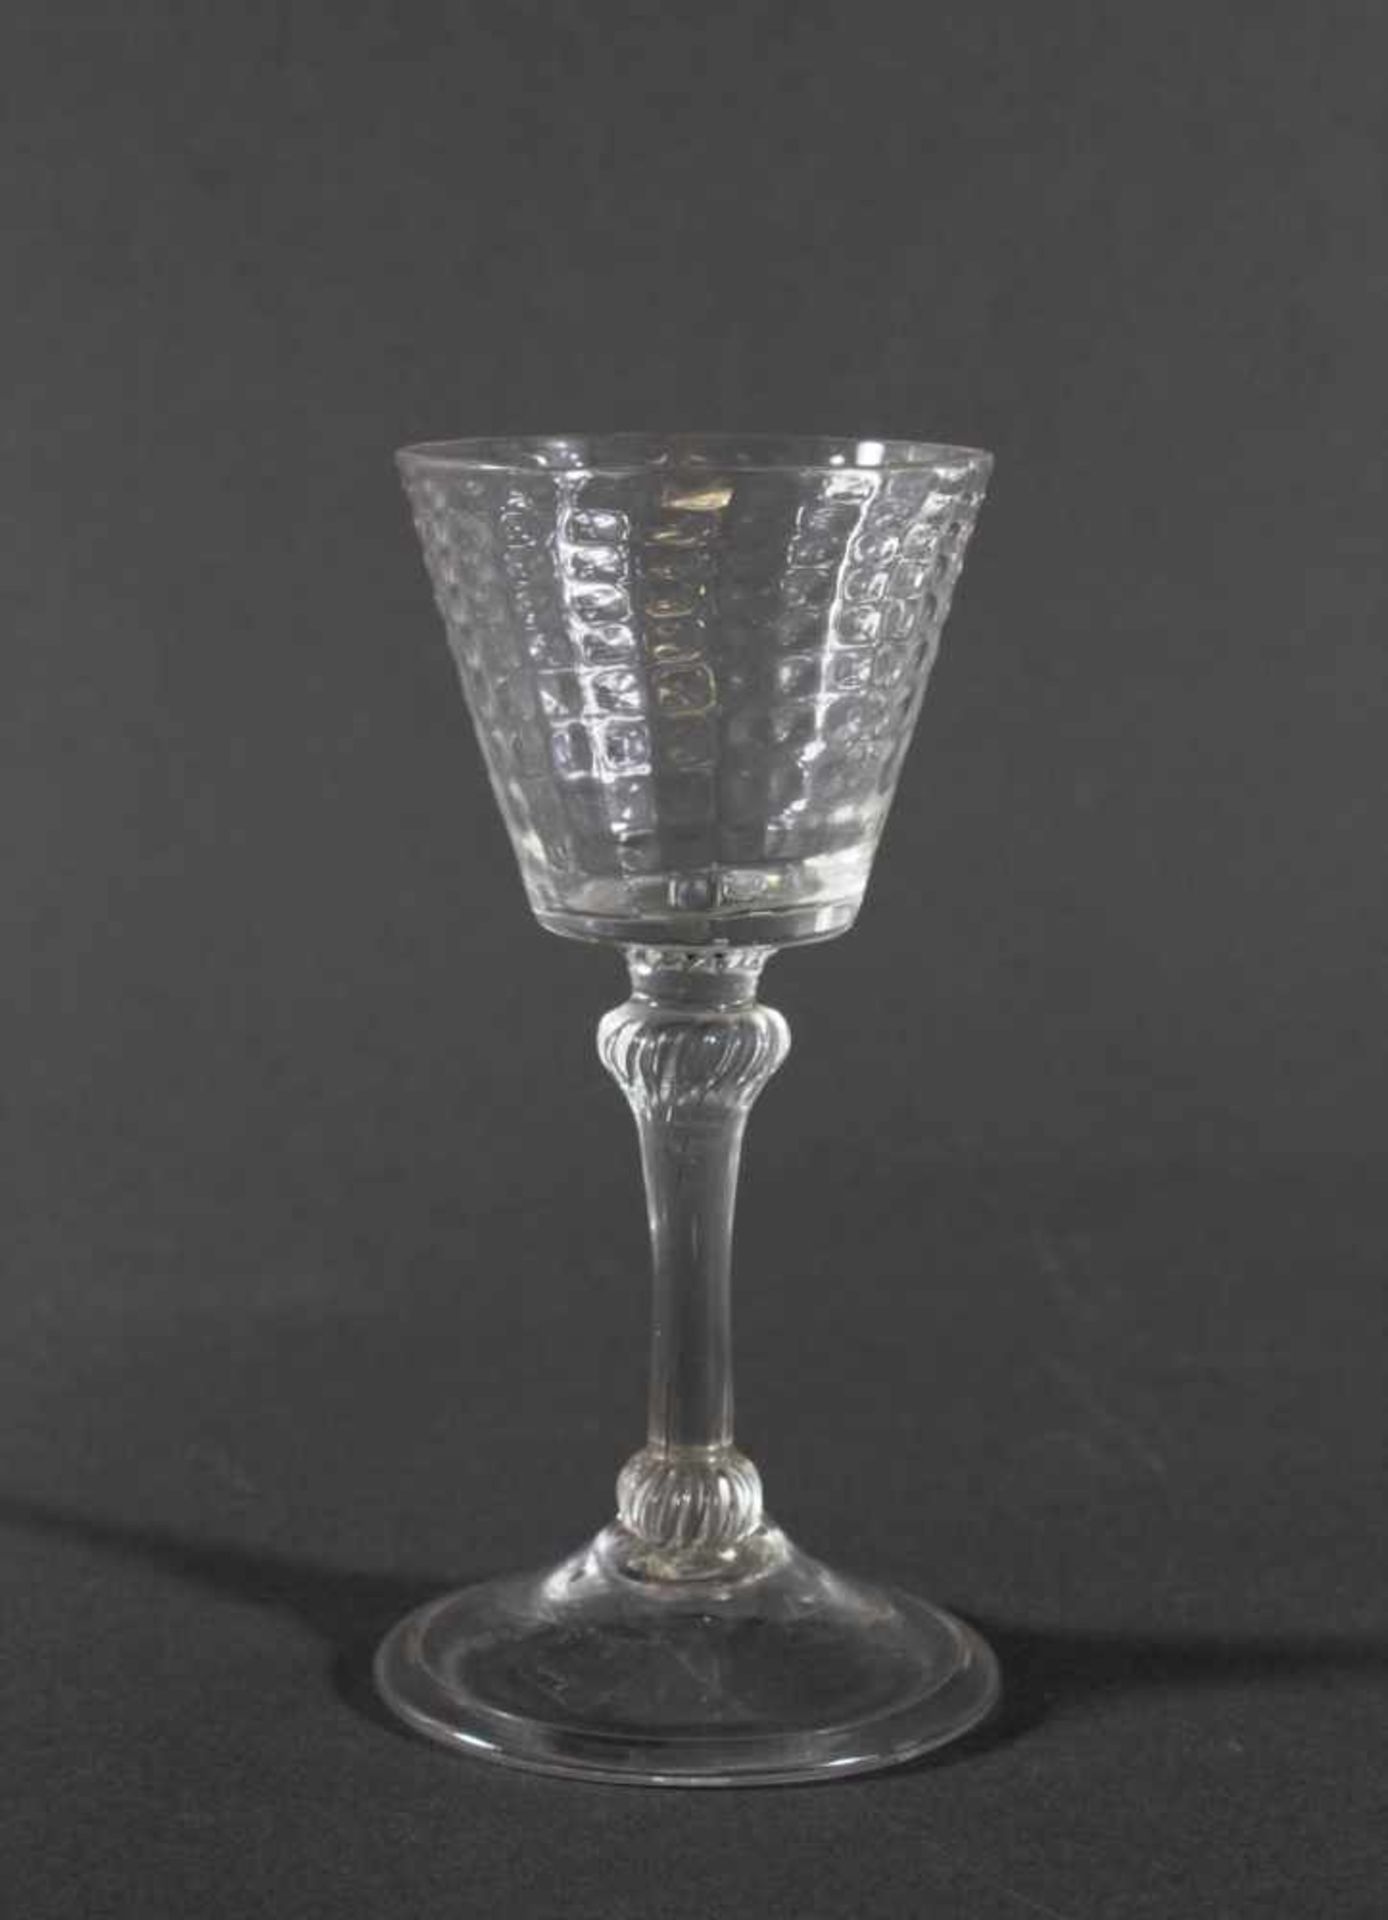 Südweinglas, Lüttich, um 1780Farbloses Glas, mit wabenartiger Struktur überzogene Kuppa.